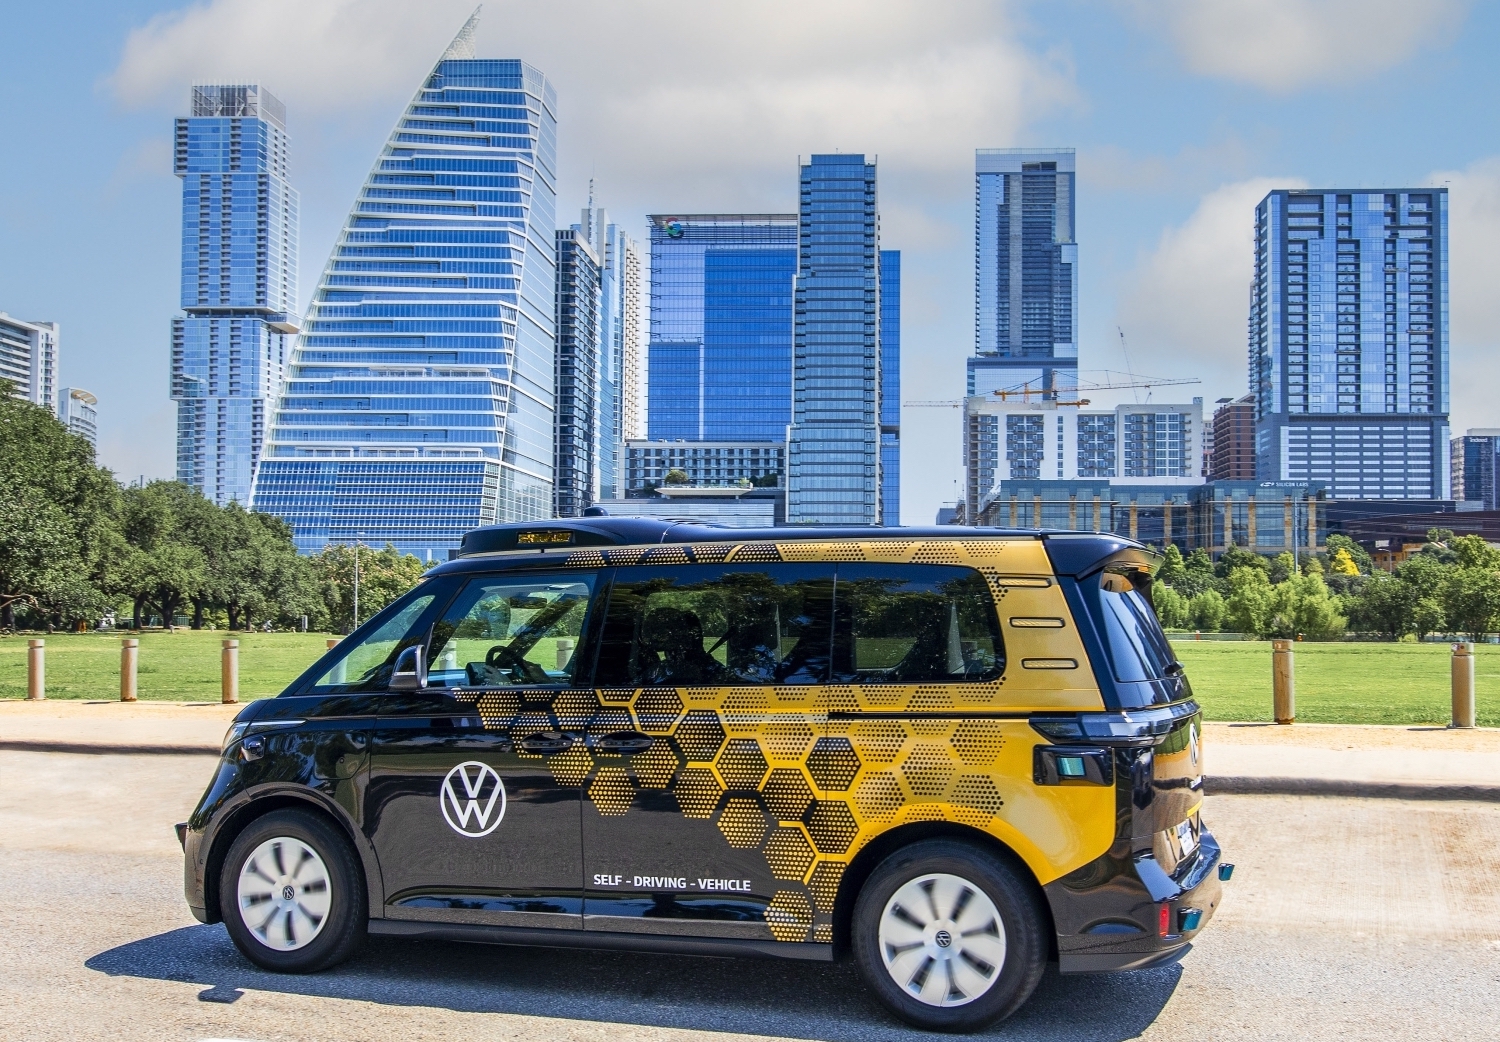 Volkswagen autonomous driving test program Texas